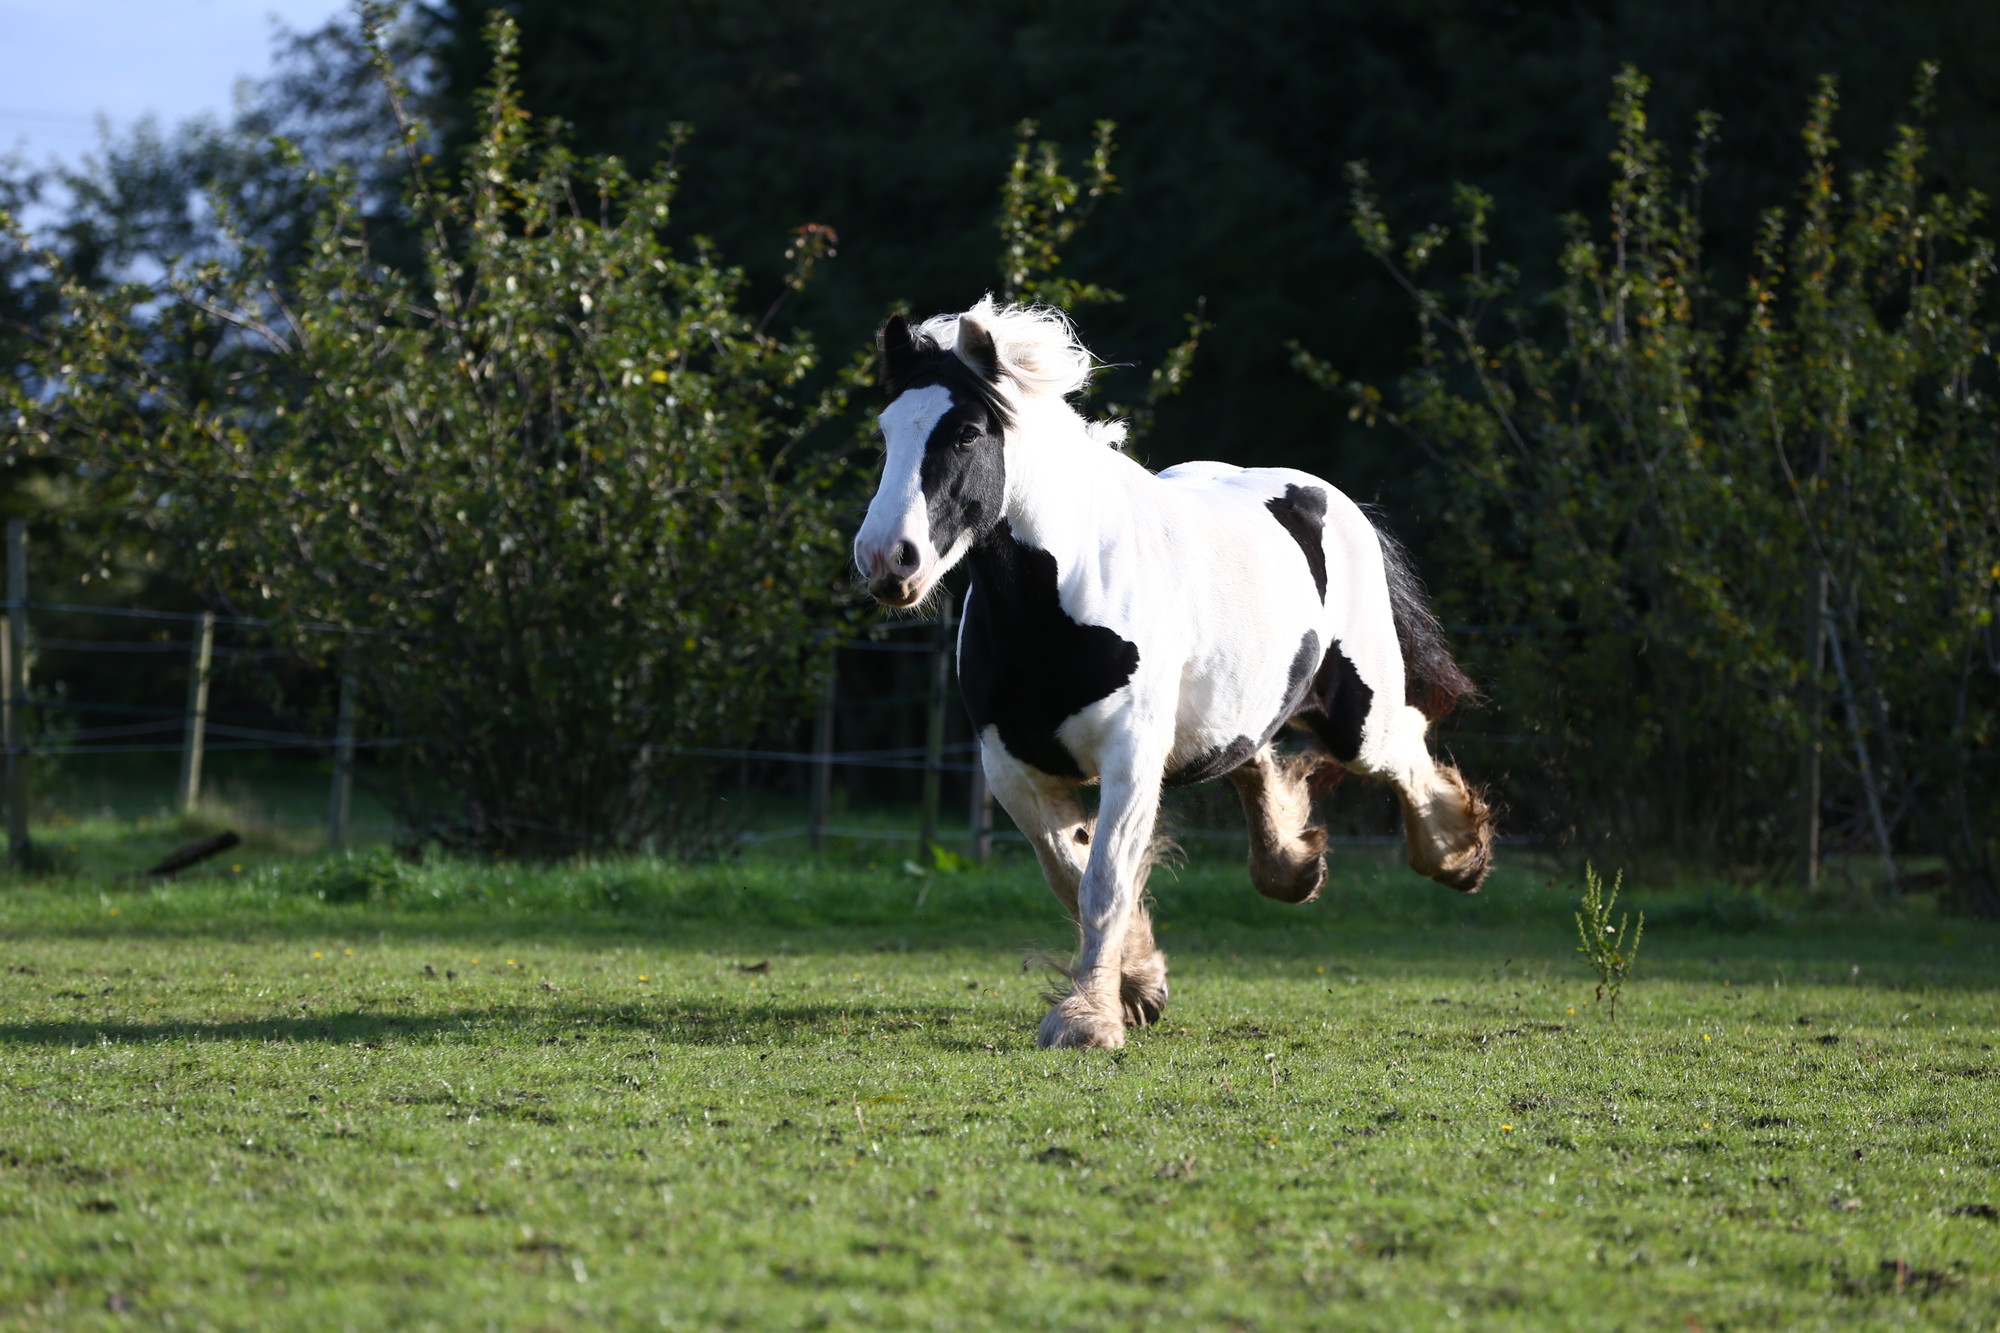 White and black horse running through field